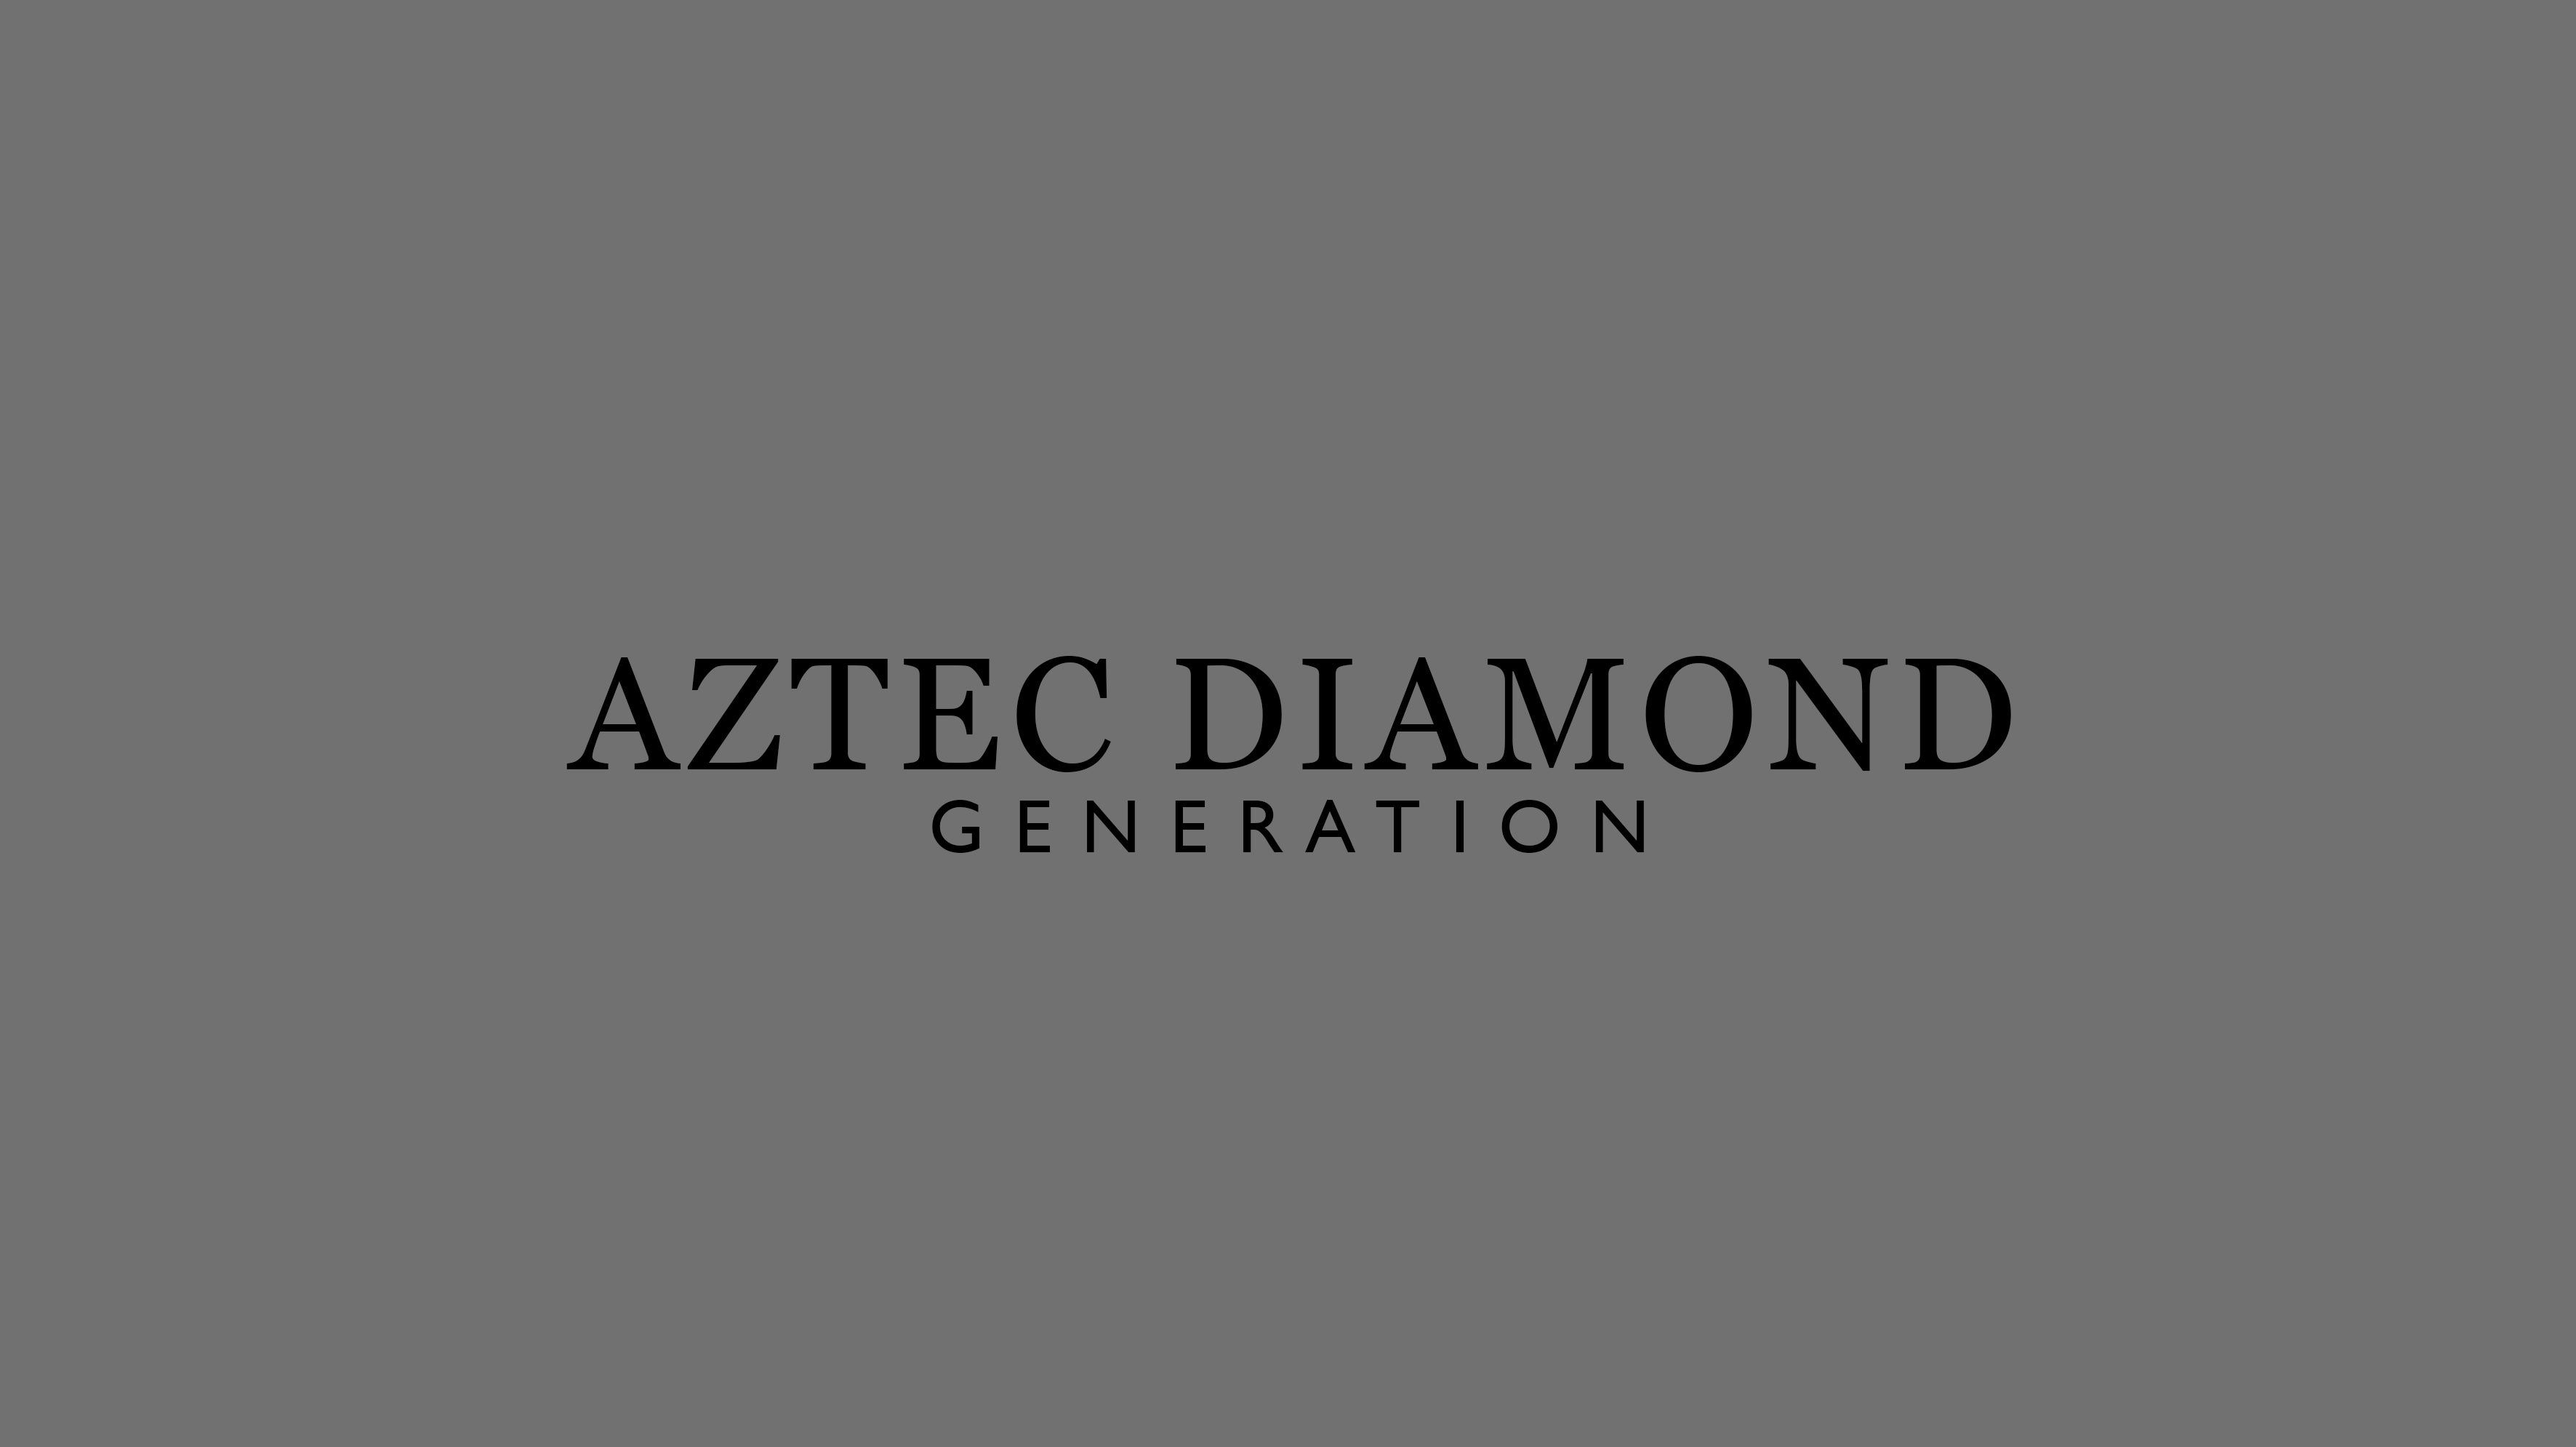 Aztec Diamond Generation